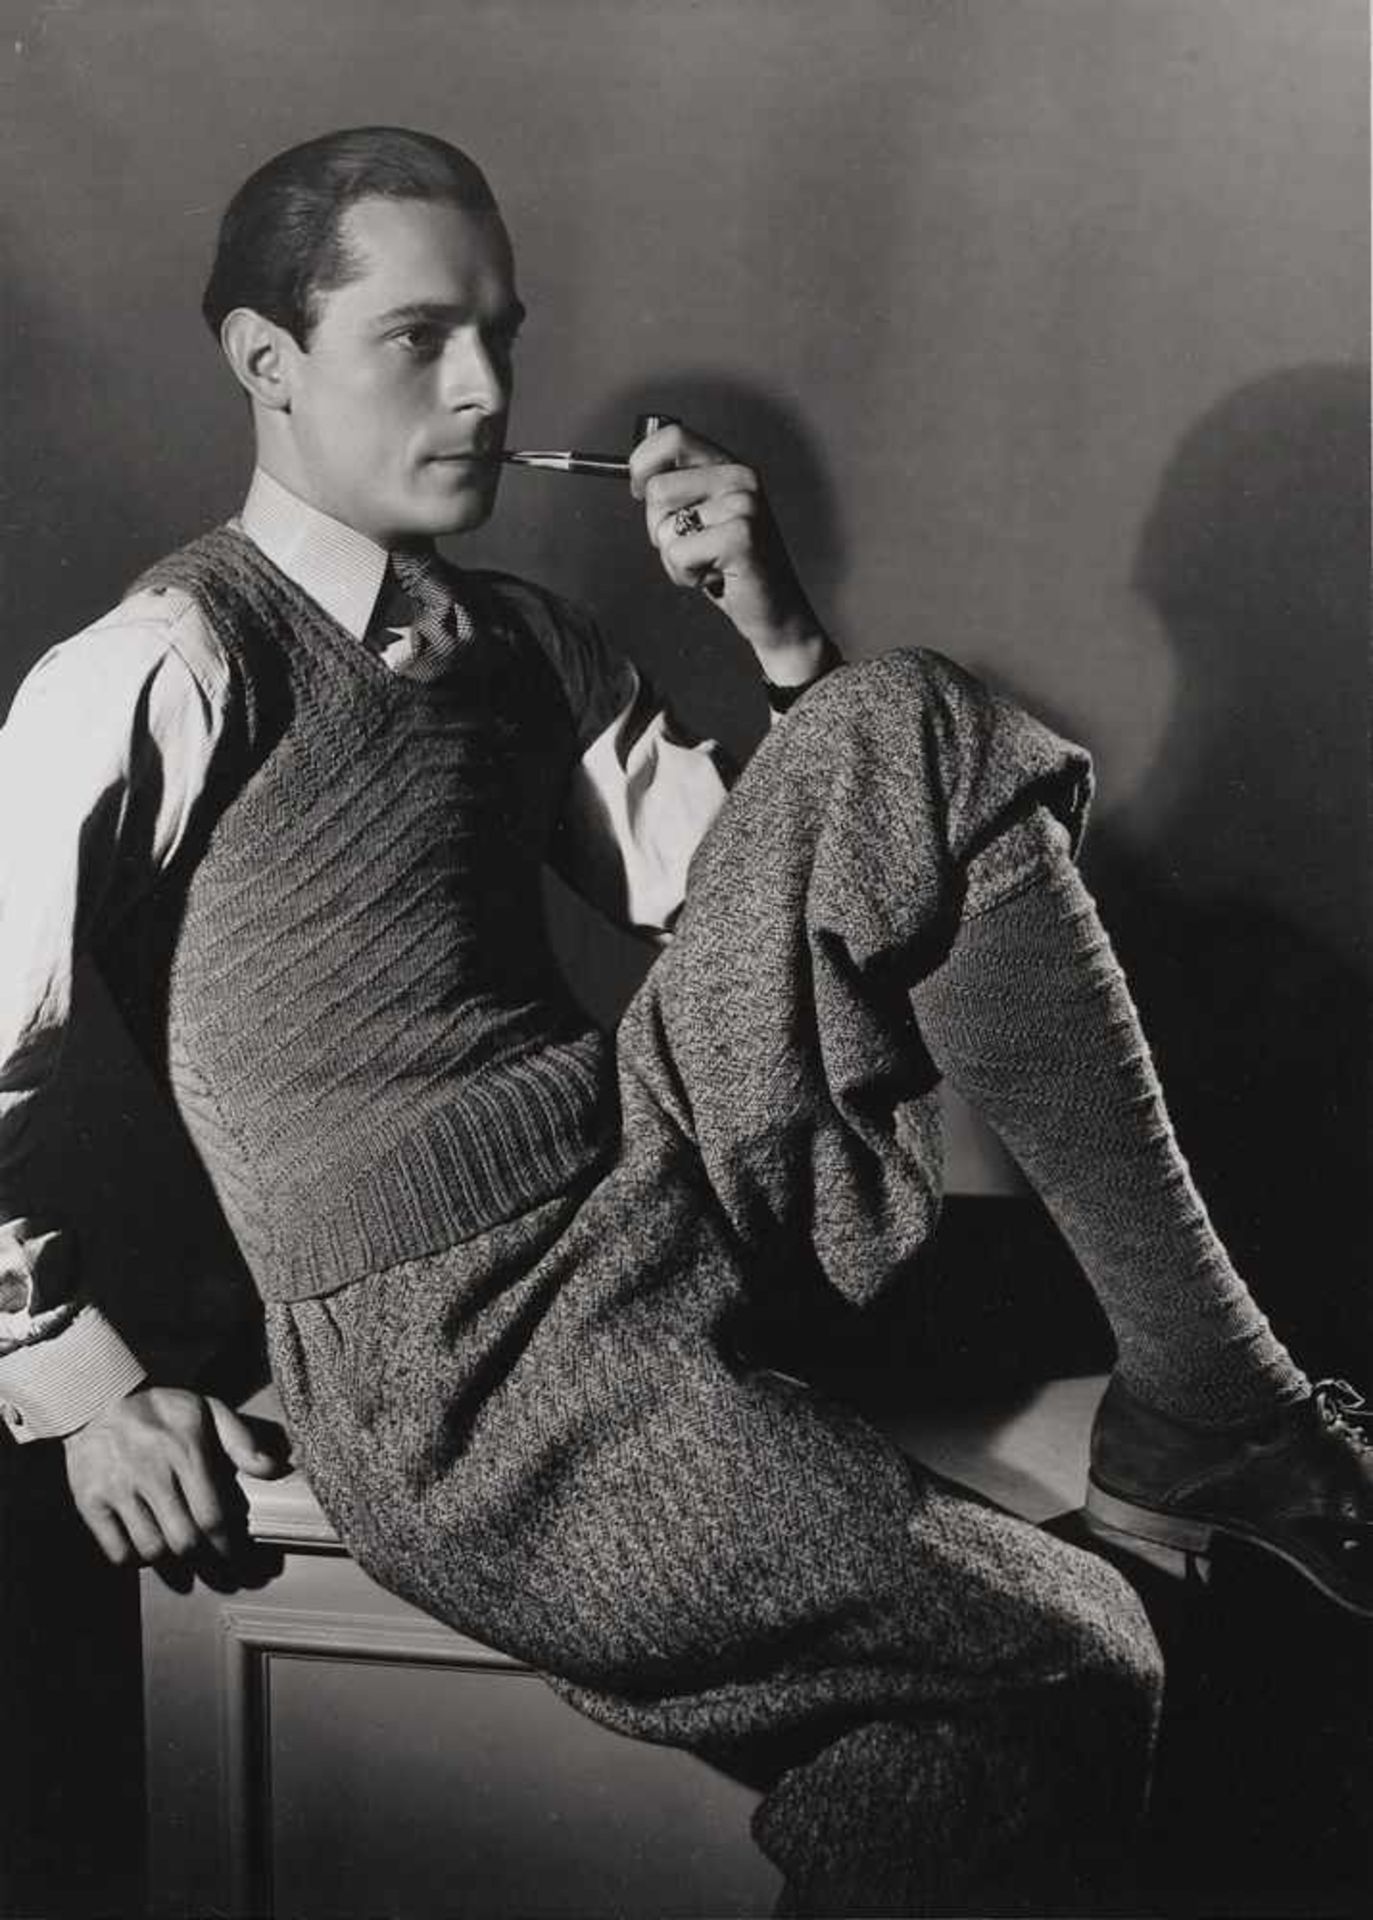 Fashion Photography: Selected men's fashion images Photographer: Yva (Else Simon Neuländer, 1900 -